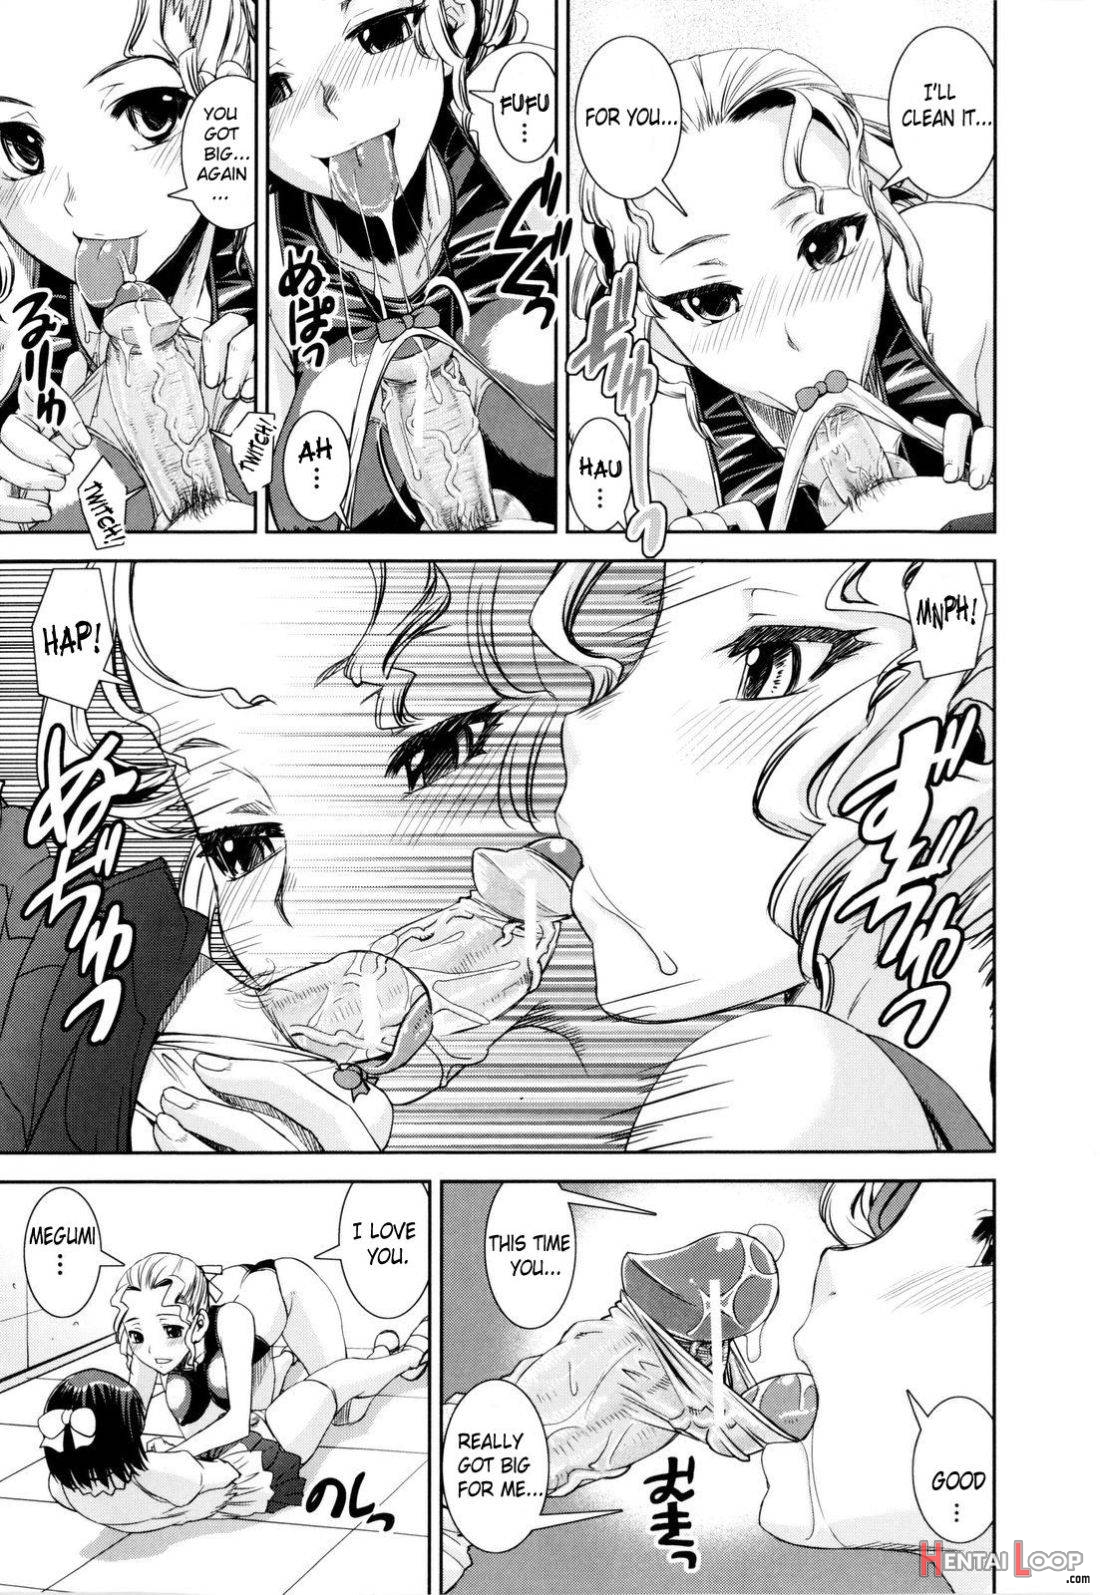 Kyouei! page 44